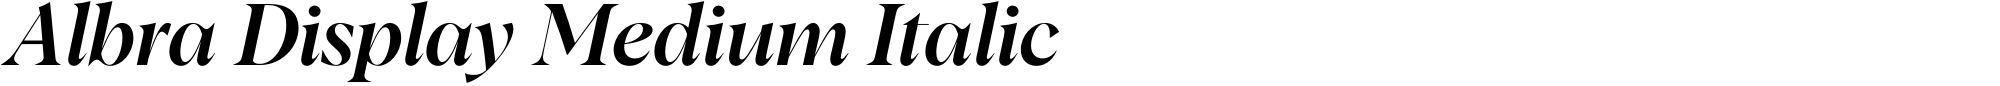 Albra Display Medium Italic image